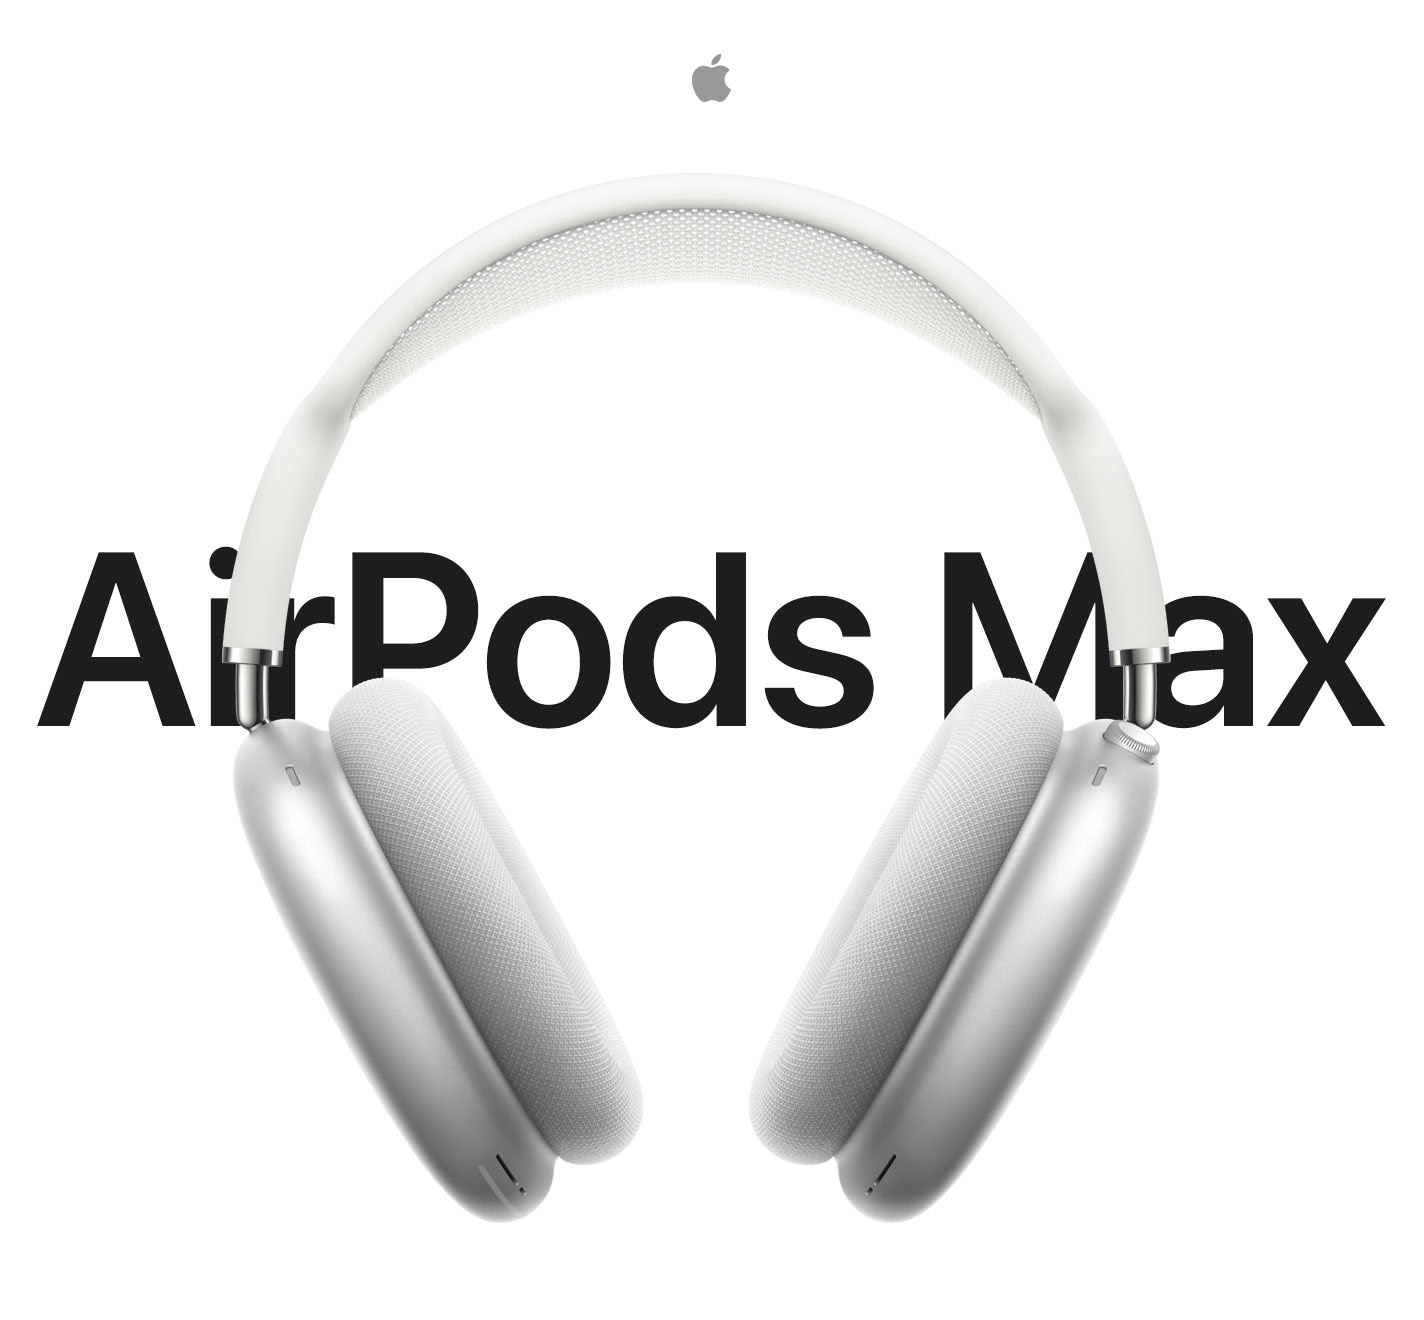 Apple announce AirPods Max, their over-ear headphones for a hefty $549